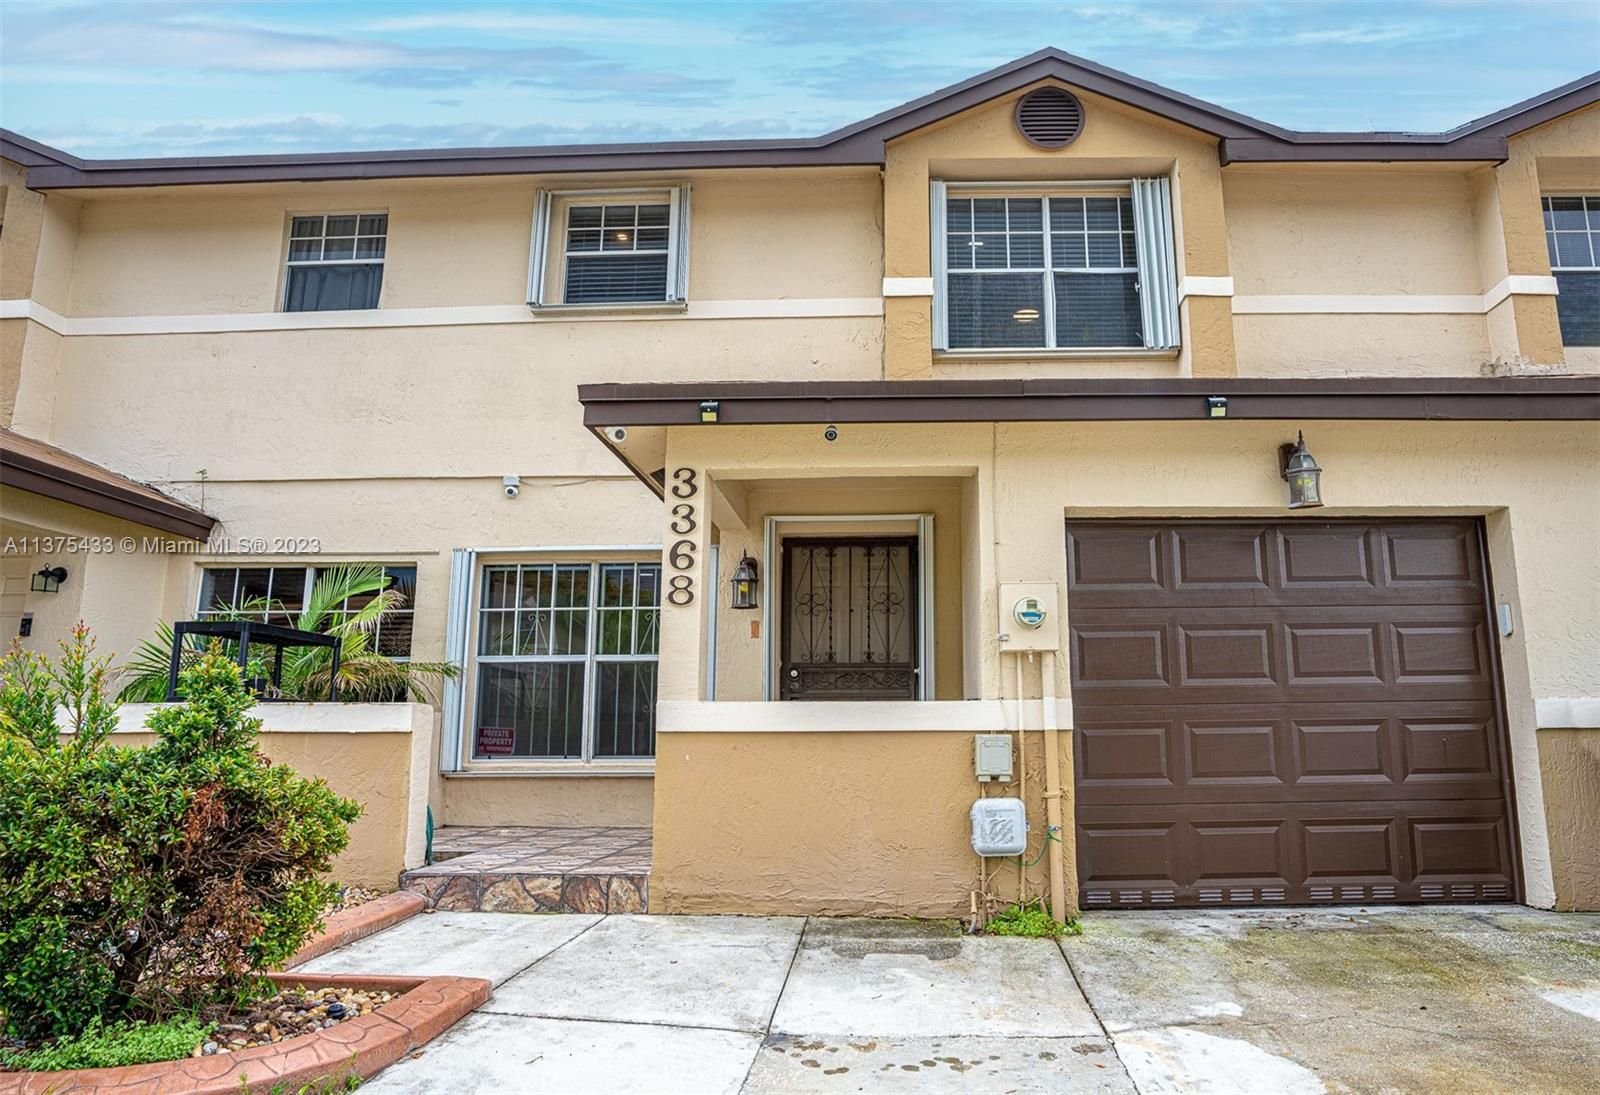 Real estate property located at 3368 197th Ter, Miami-Dade County, Miami Gardens, FL